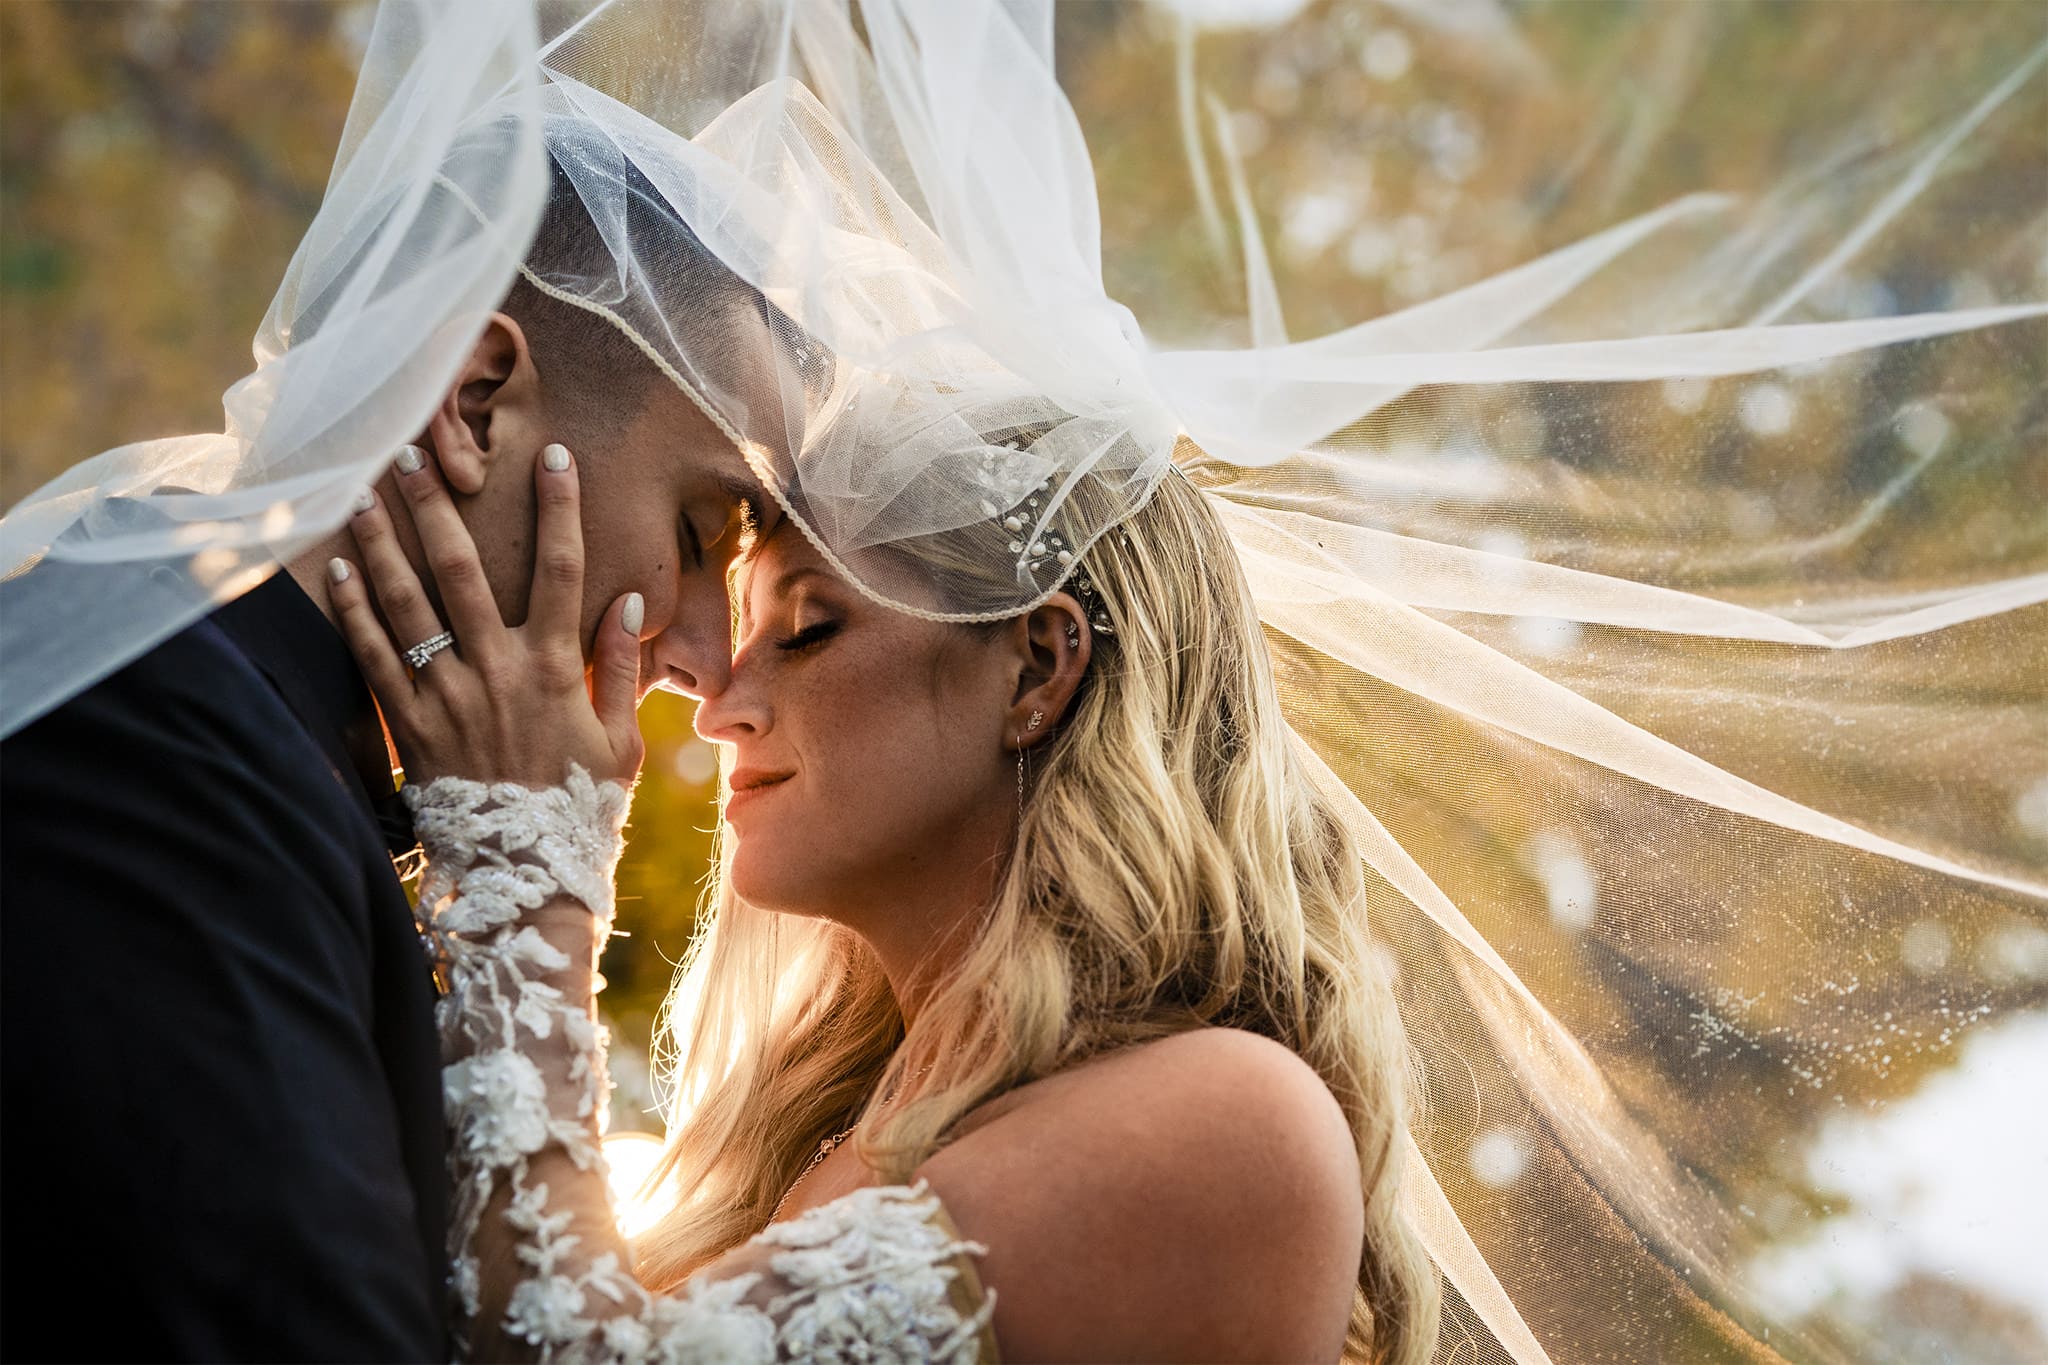 Bride touches groom's face under wedding veil